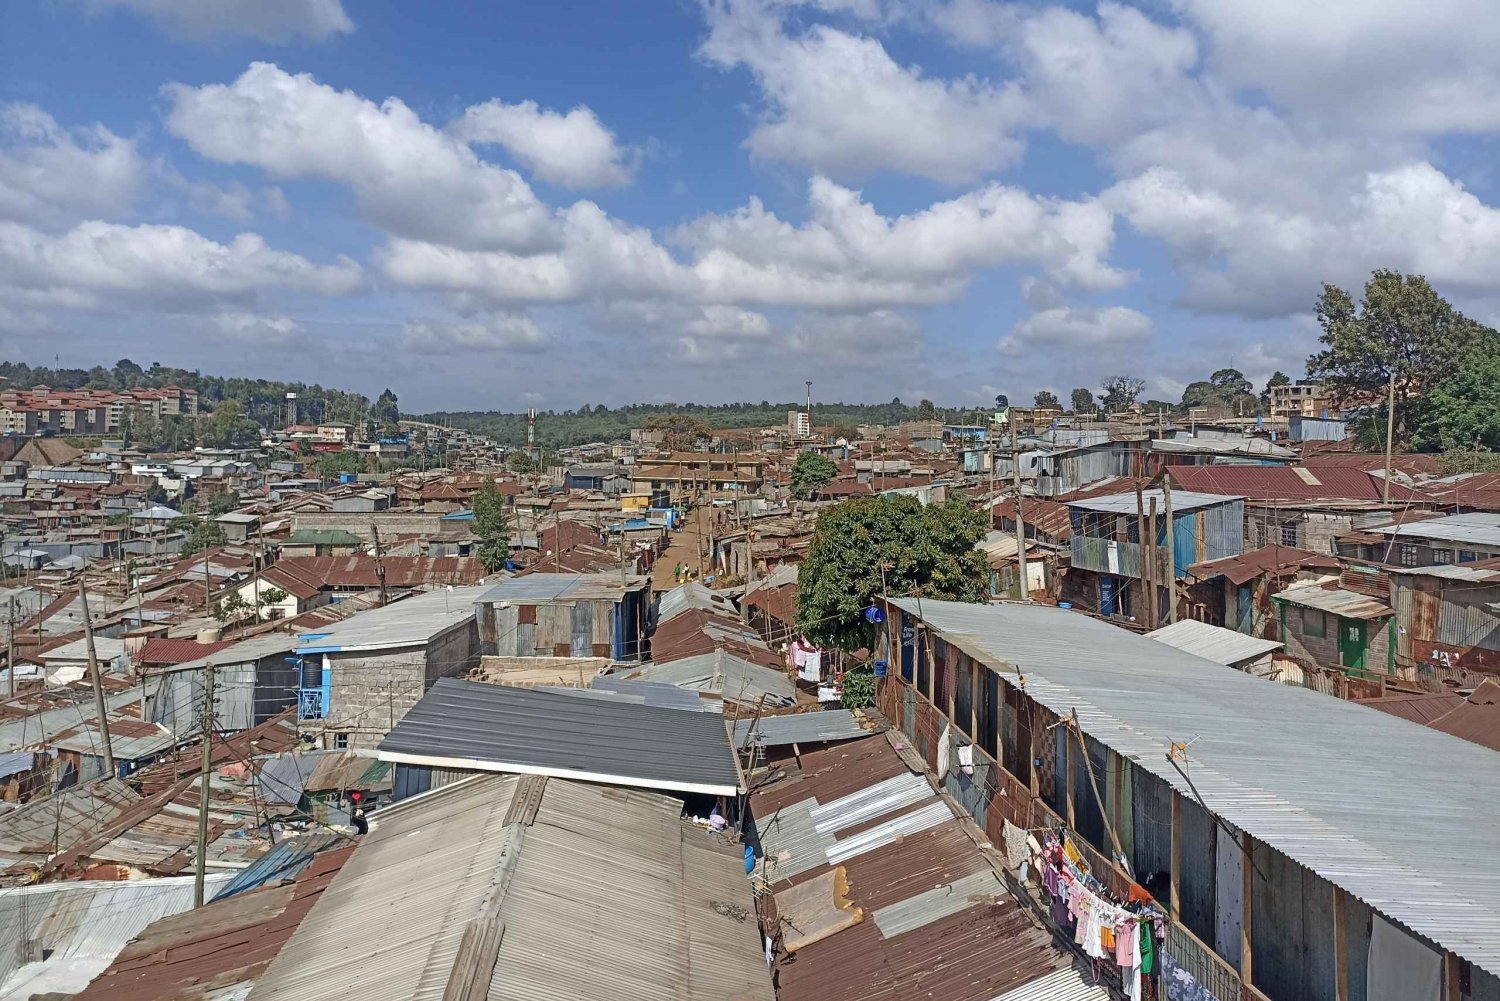 Visite du bidonville de Kibera avec un entrepreneur social local.